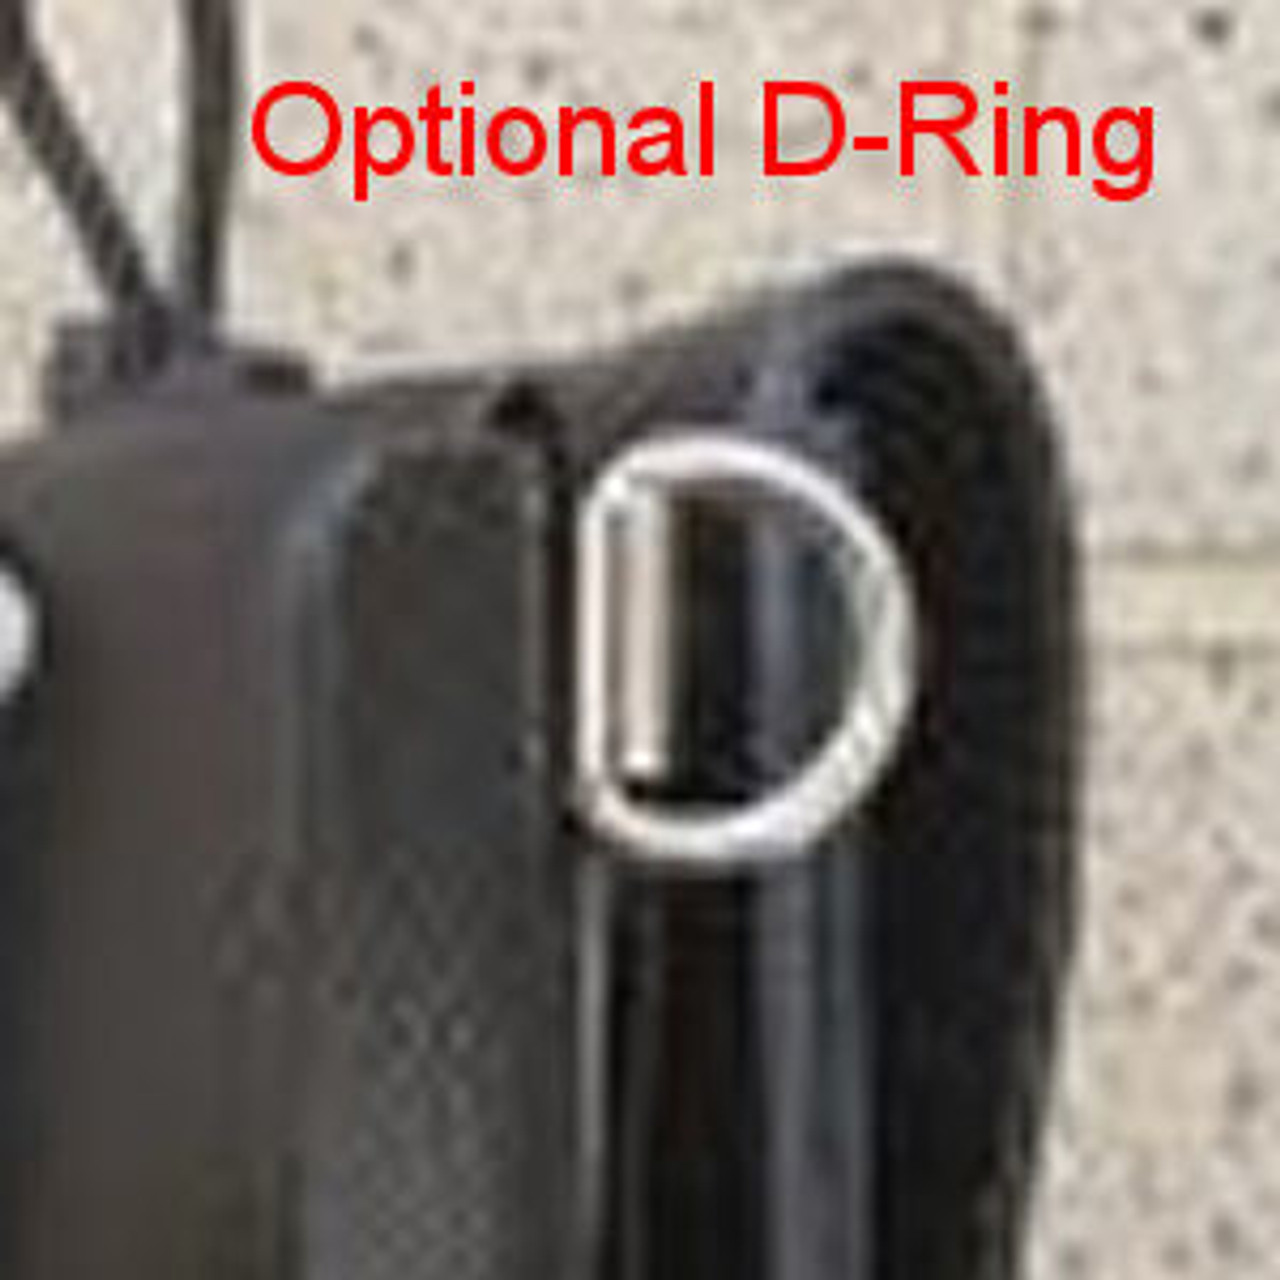 Harris P7370 Custom Radio Case With Optional D-Ring